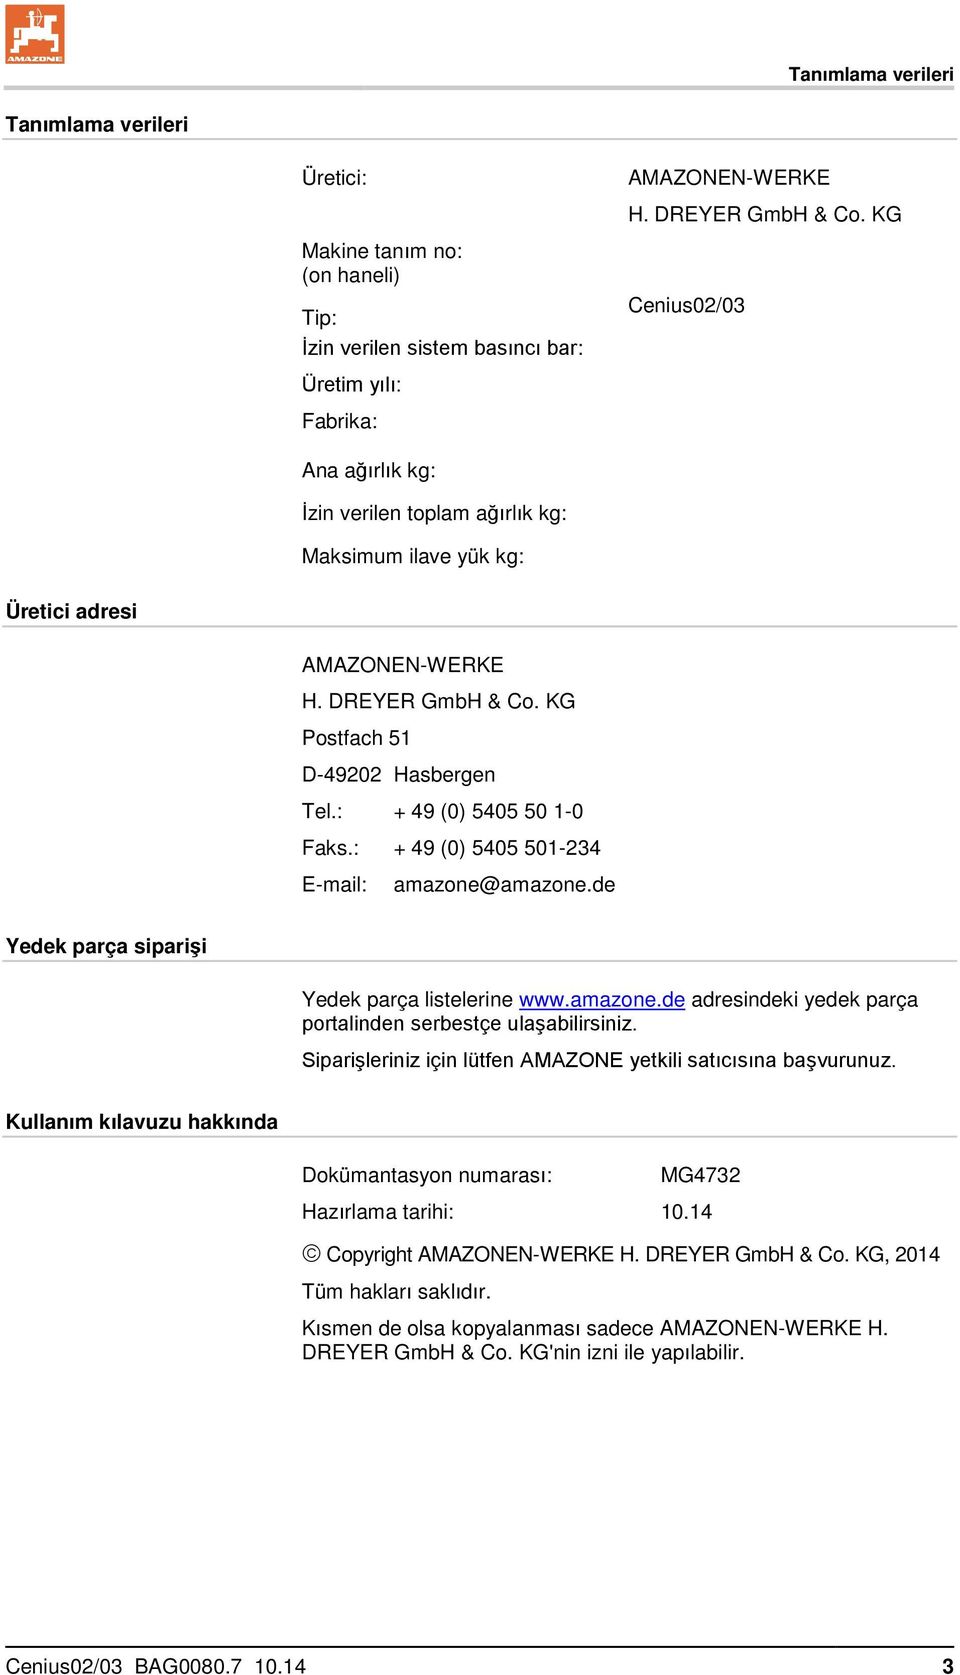 AMAZONEN-WERKE H. DREYER GmbH & Co. KG Postfach 51 D-49202 Tel.: Faks.: E-mail: Hasbergen + 49 (0) 5405 50 1-0 + 49 (0) 5405 501-234 amazone@amazone.